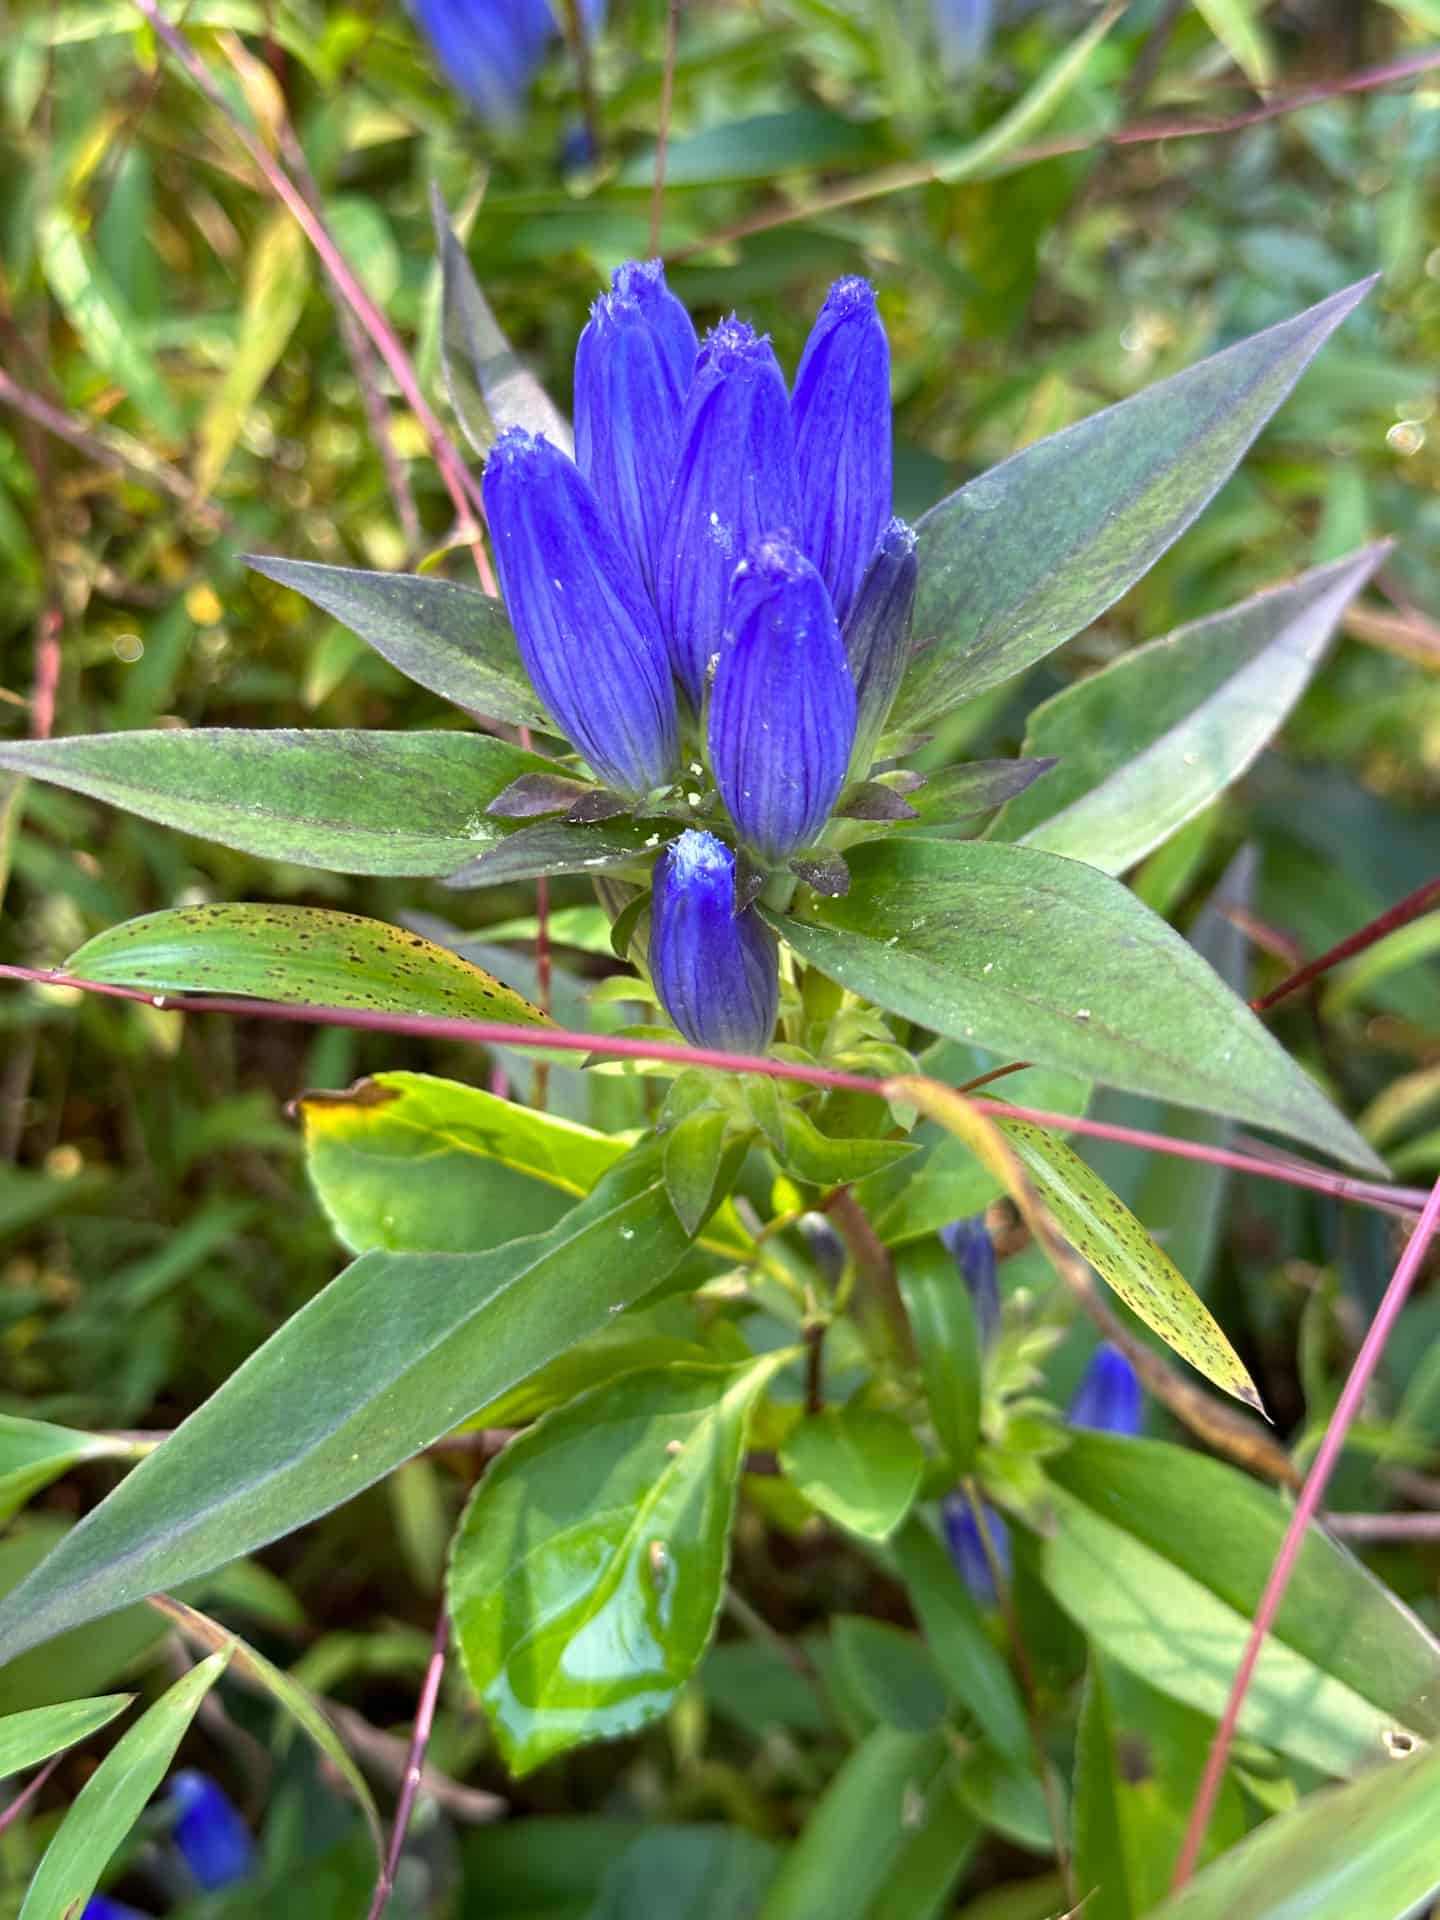 Bottle gentian flowers with a deep blue color